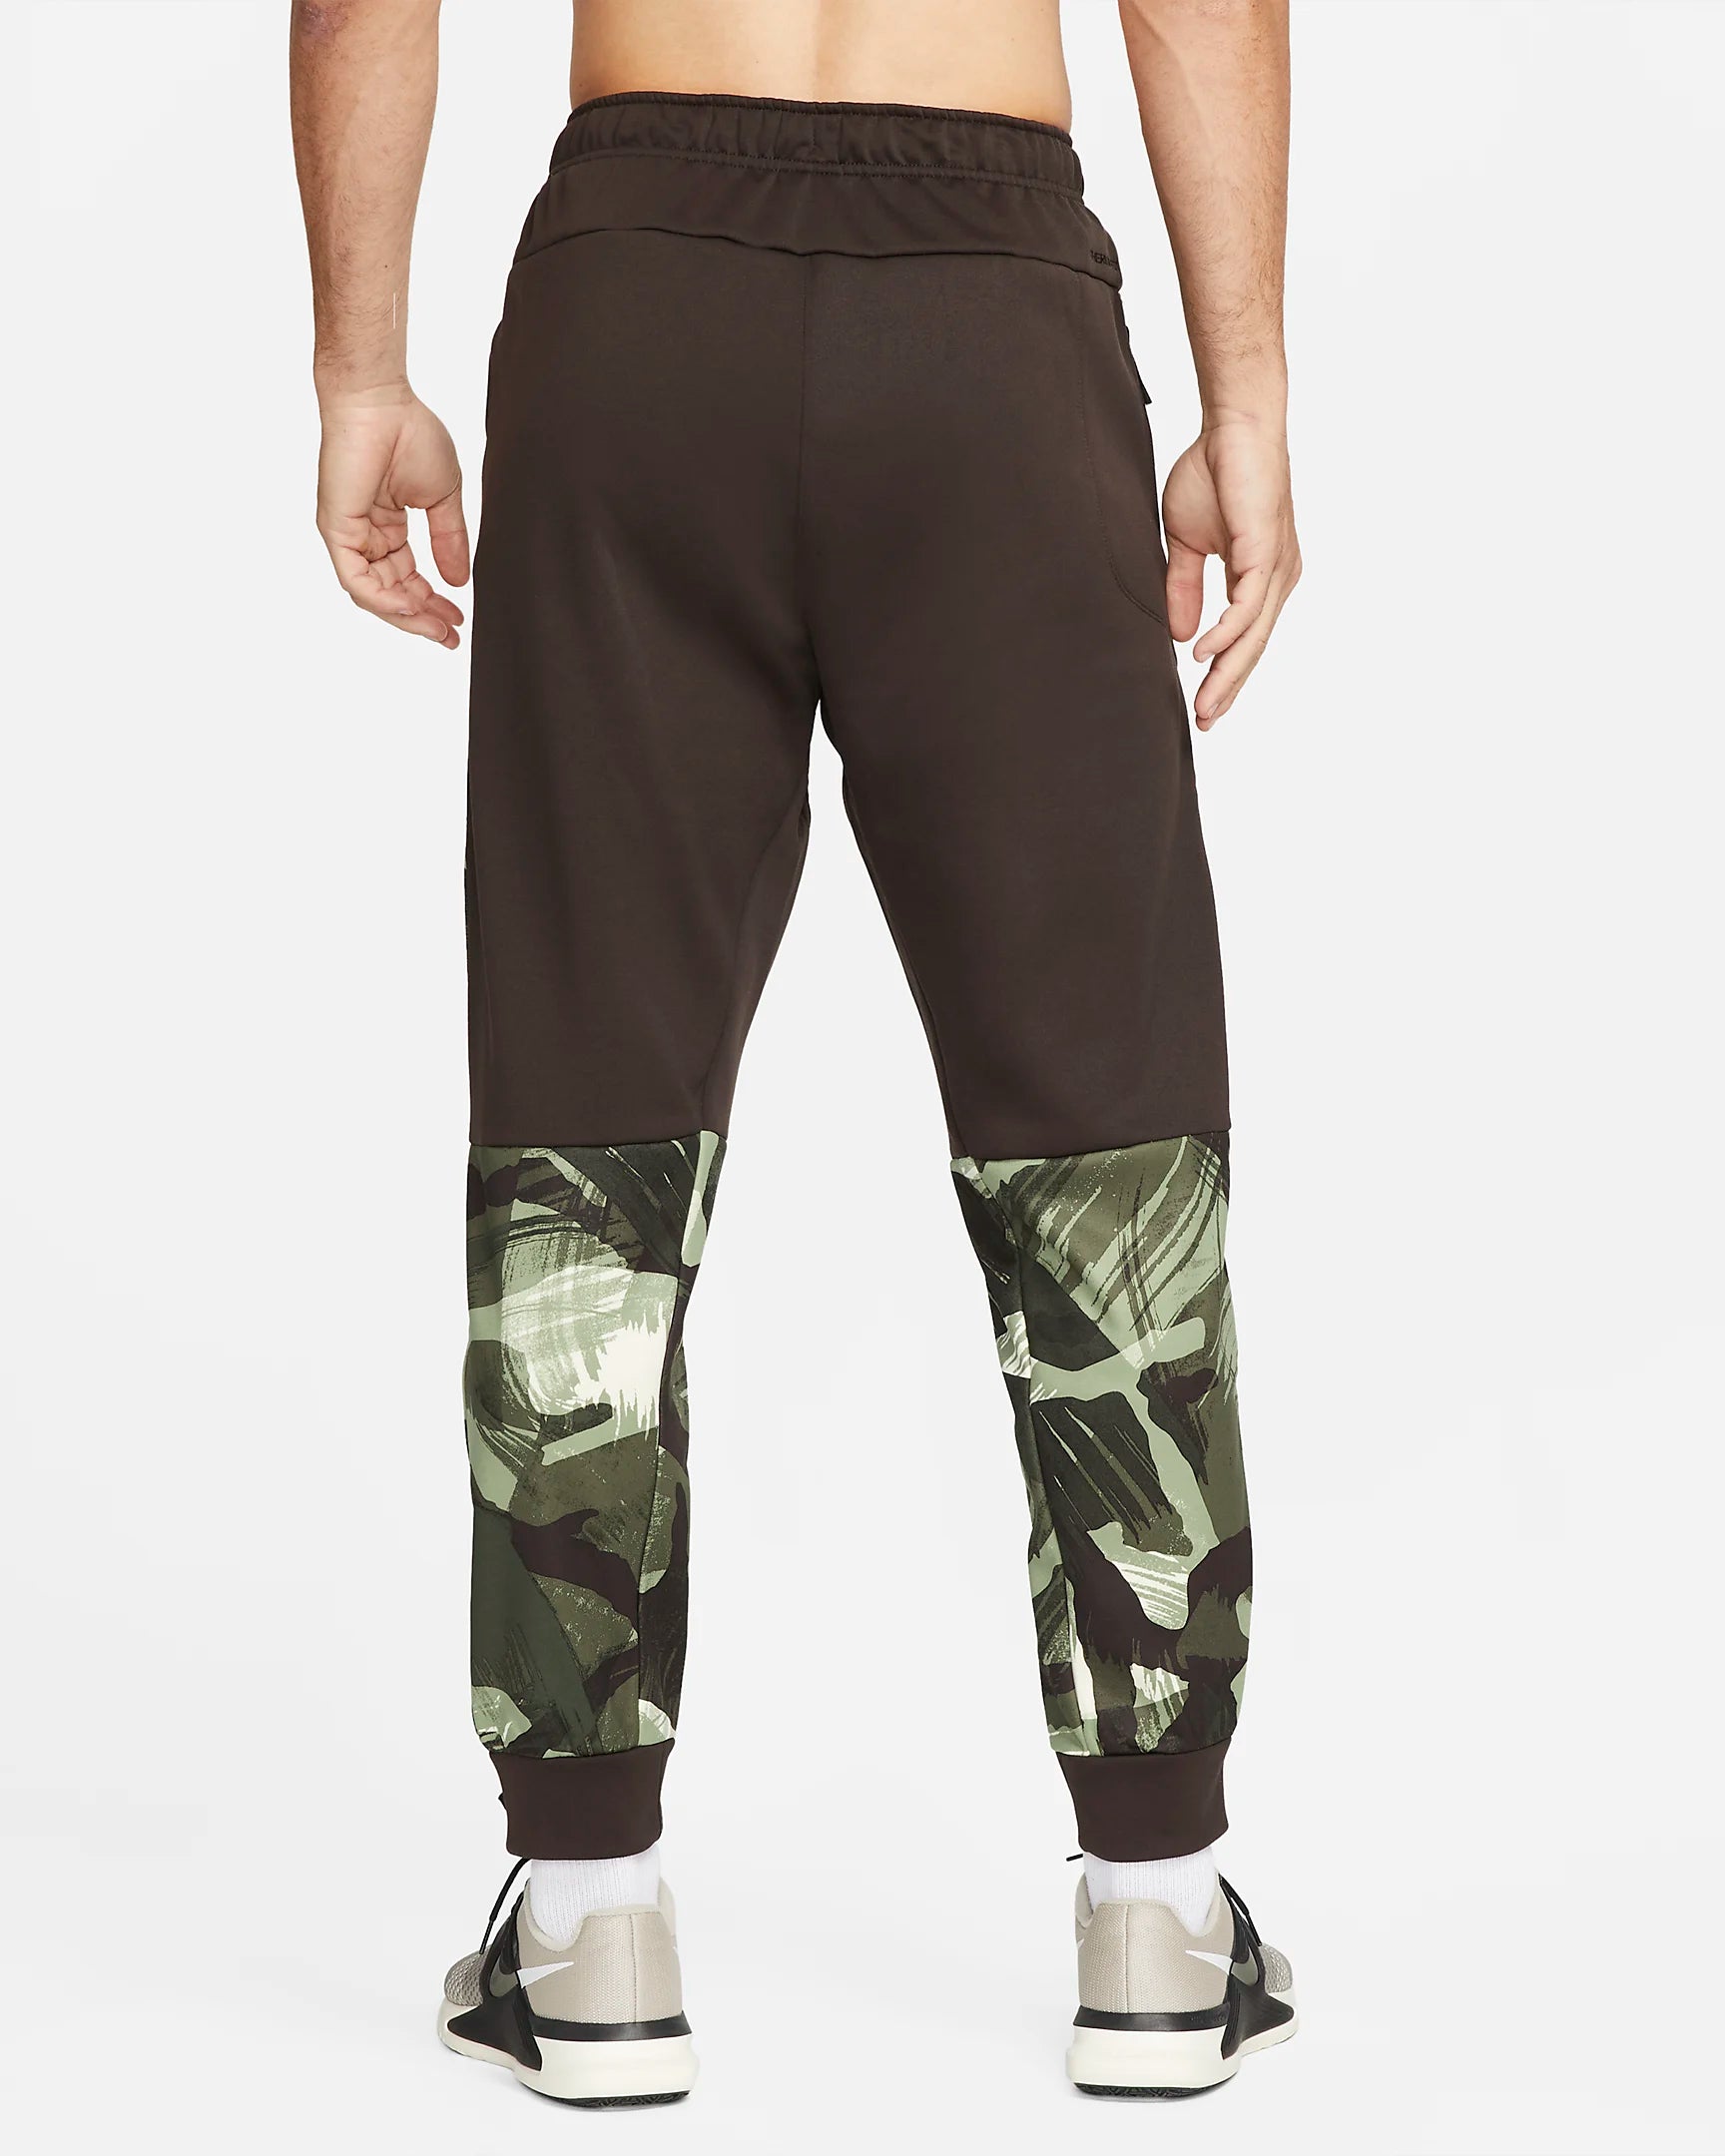 Nike Therma Fit Pantalon – Kastanienbraun/Khaki